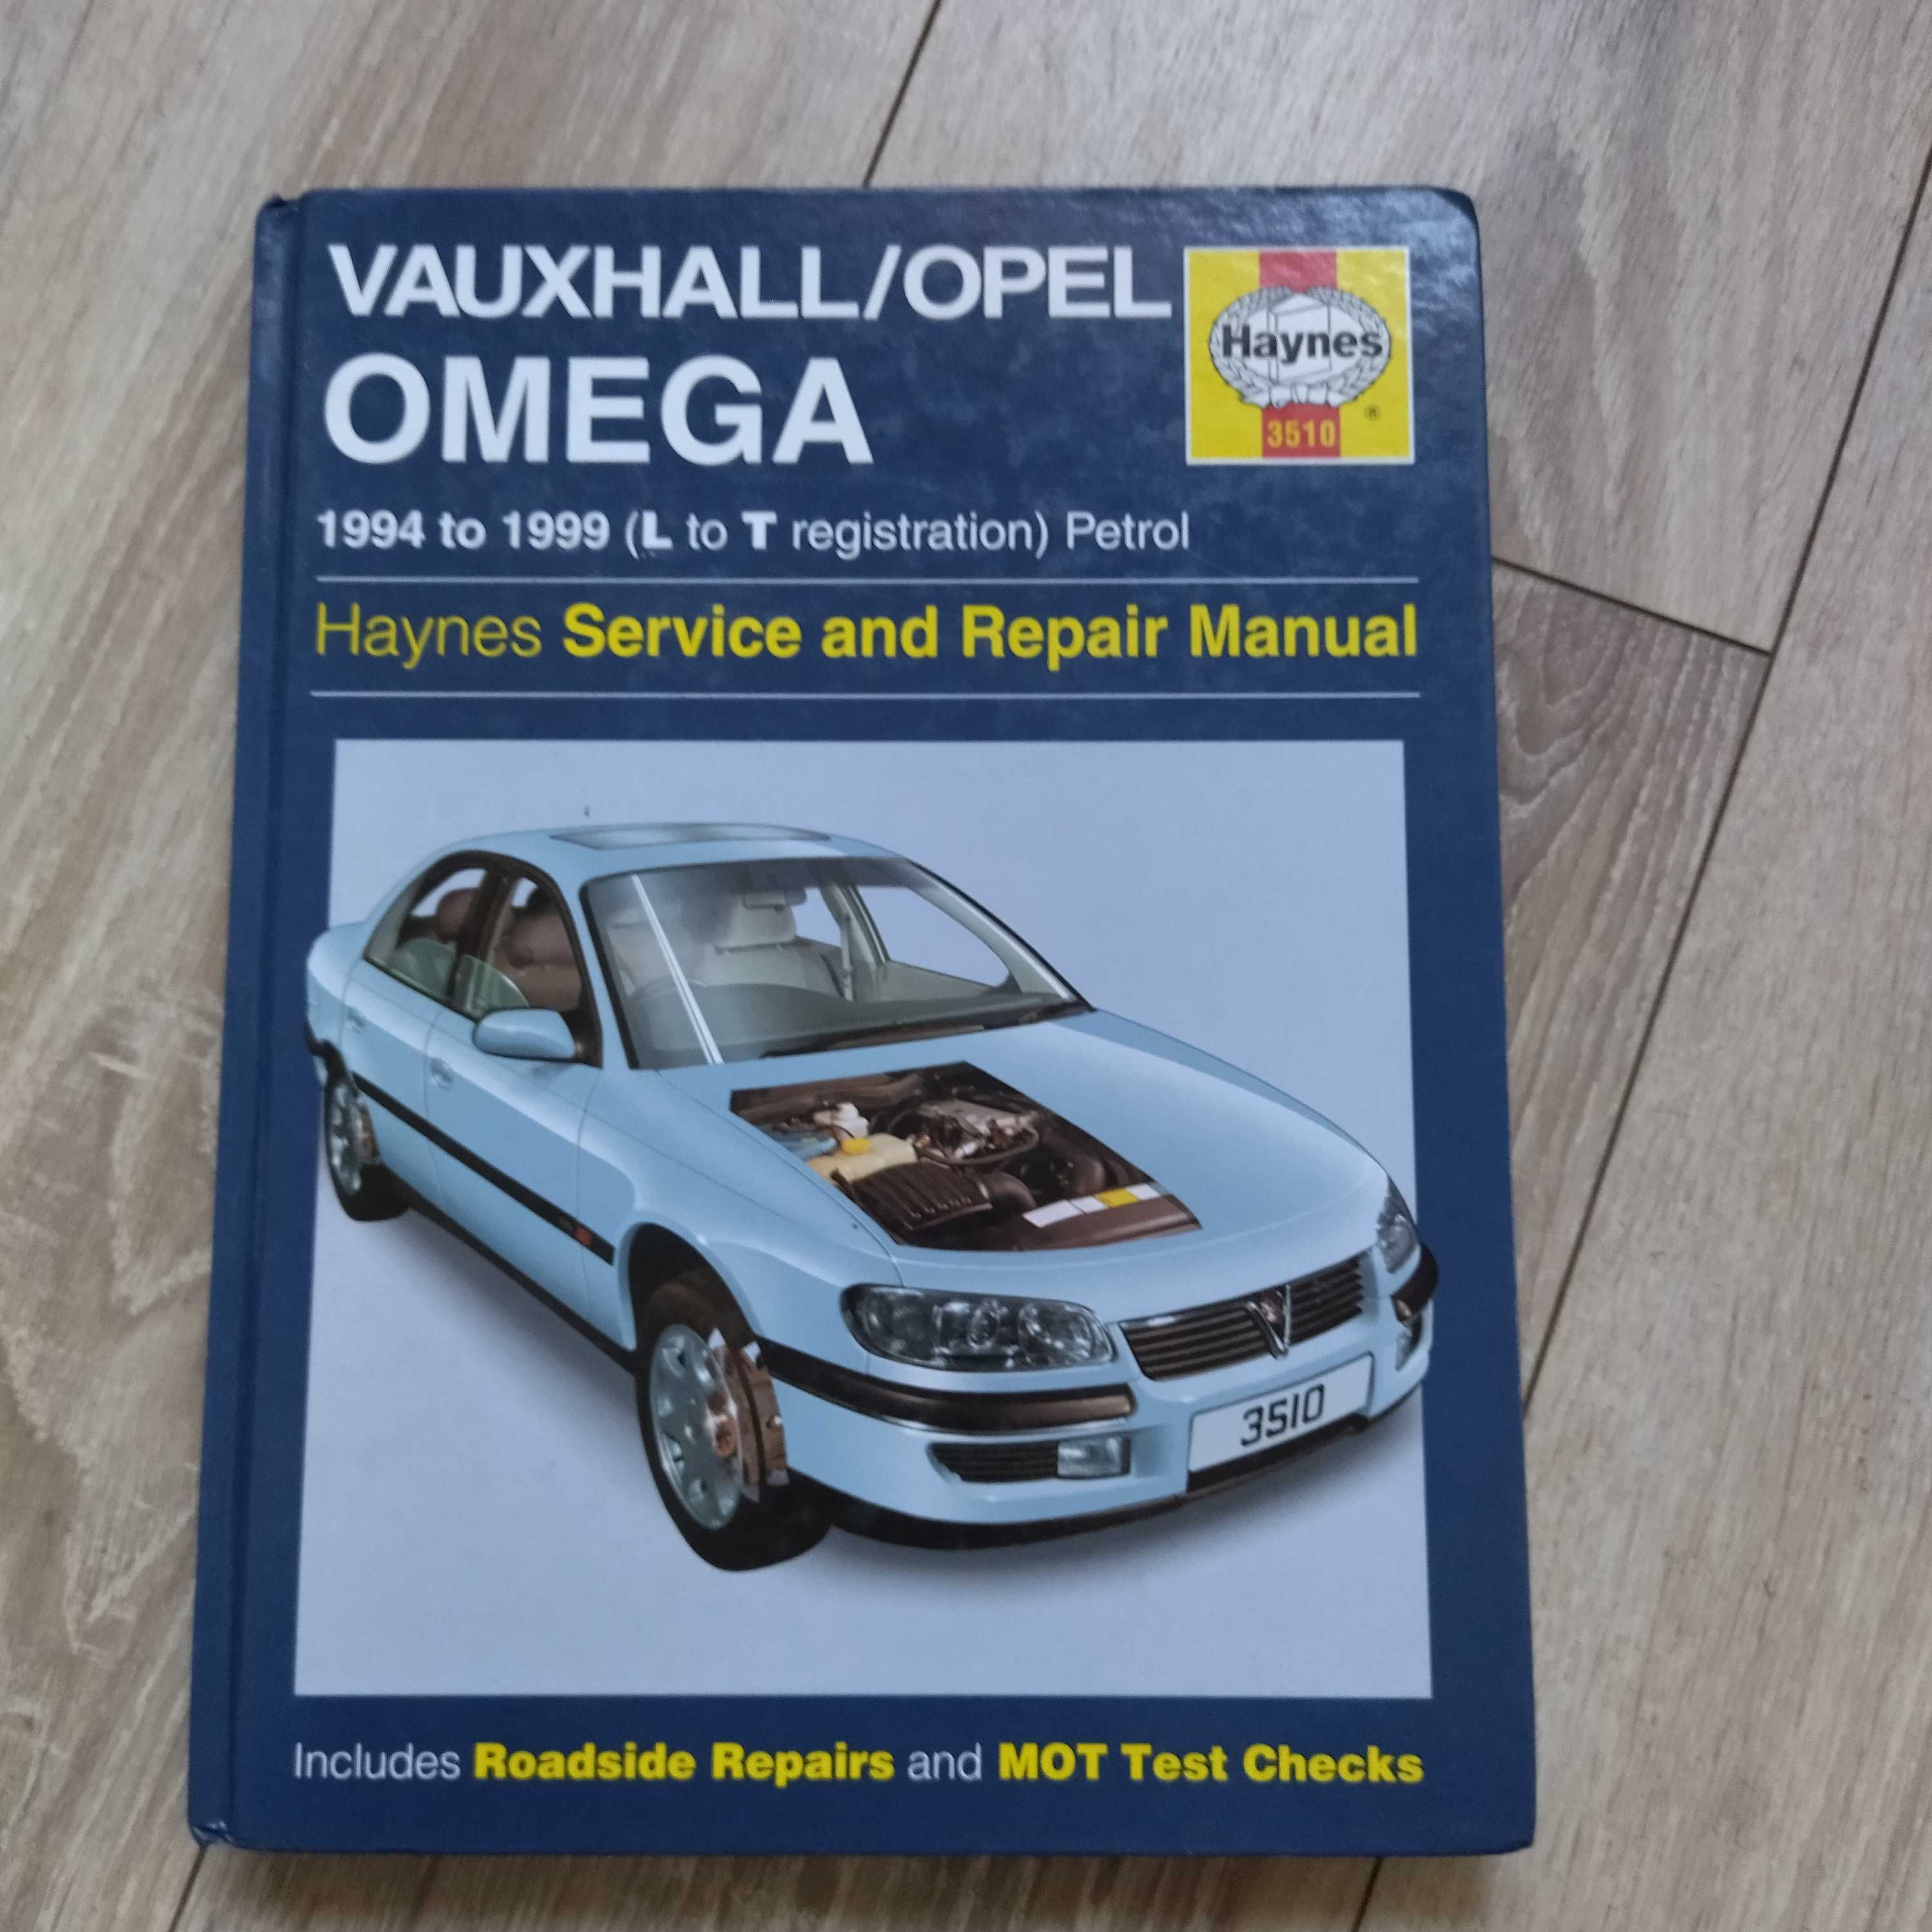 Haynes книги за ремонт на Opel Omega, Corsa, Astra Zafira